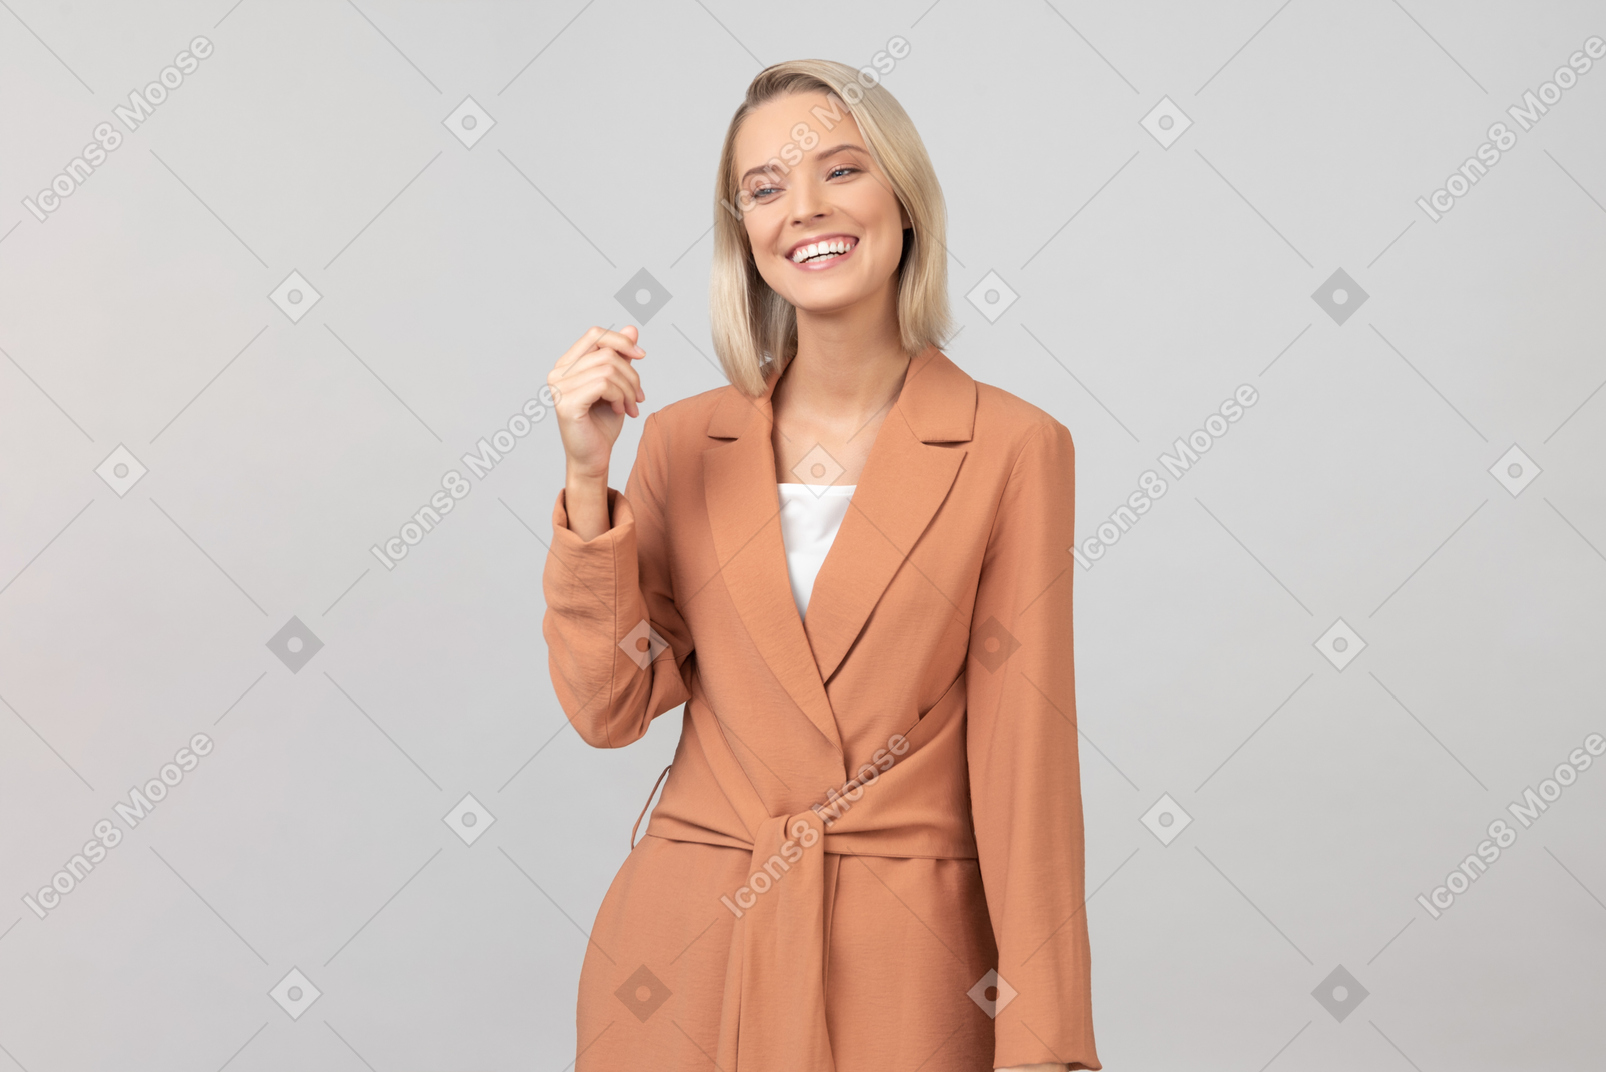 Smiling beautiful woman appreciating a joke